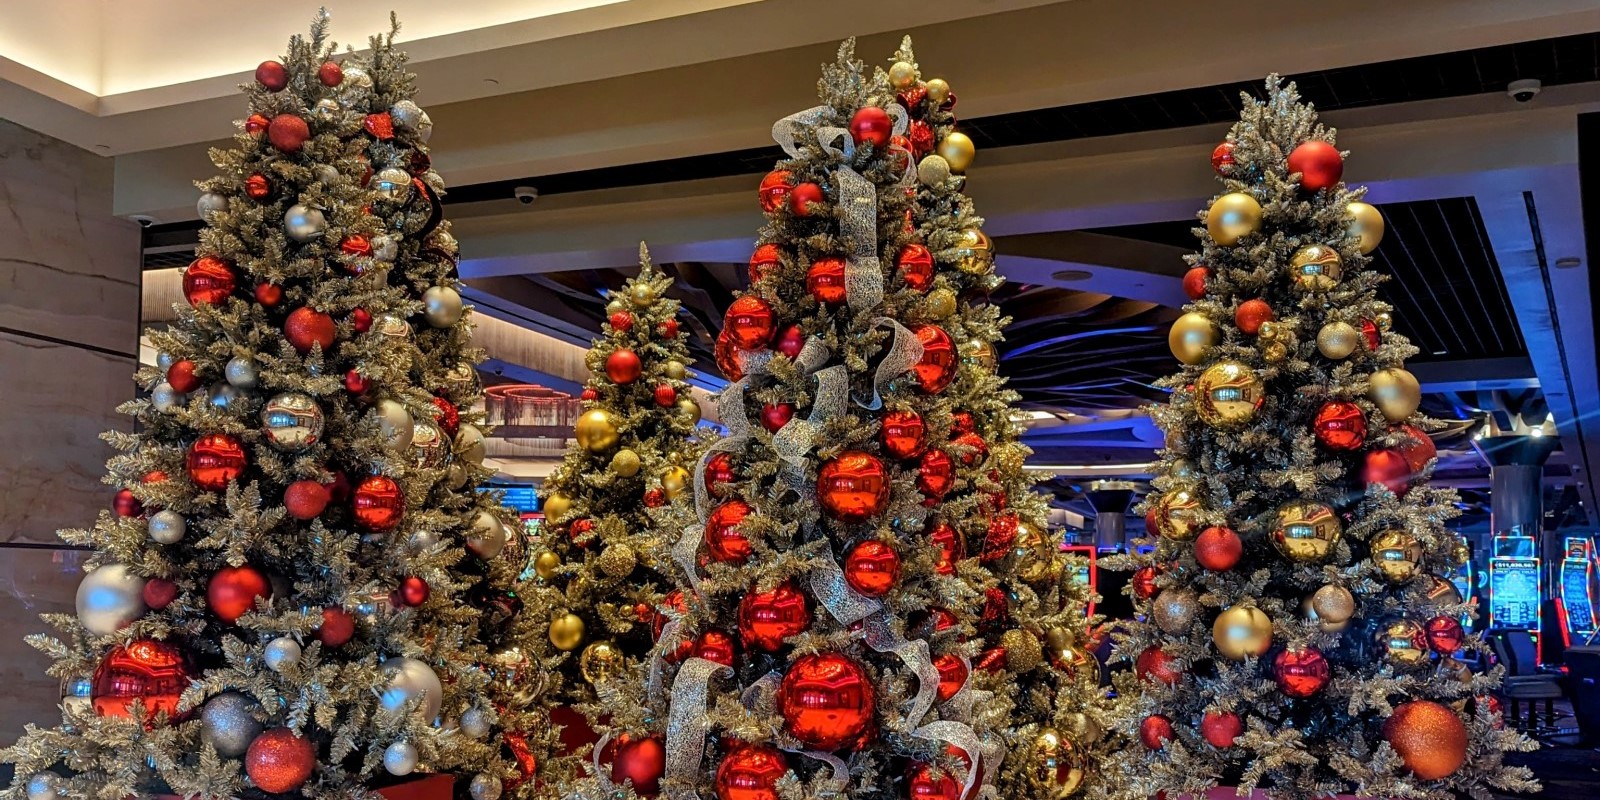 photo of festively decorated Christmas trees at SAHARA Las Vegas